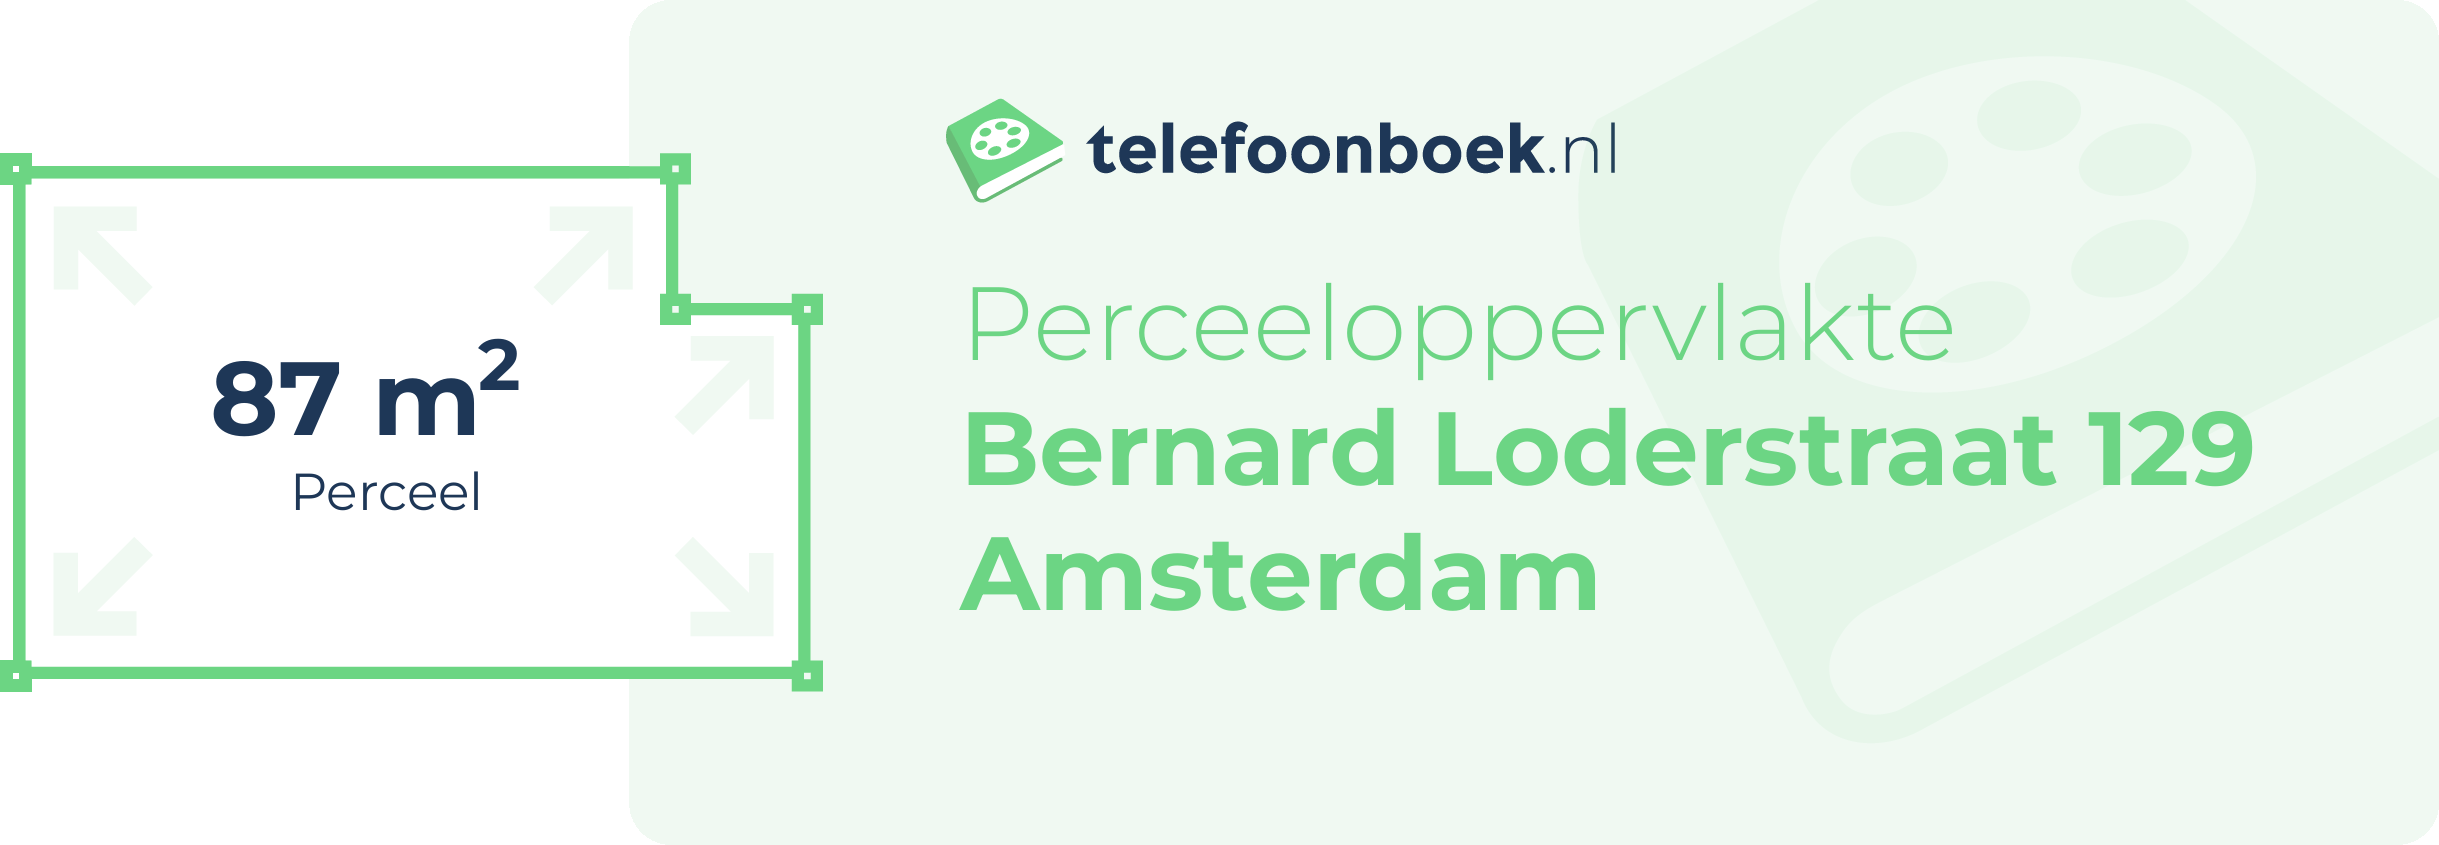 Perceeloppervlakte Bernard Loderstraat 129 Amsterdam